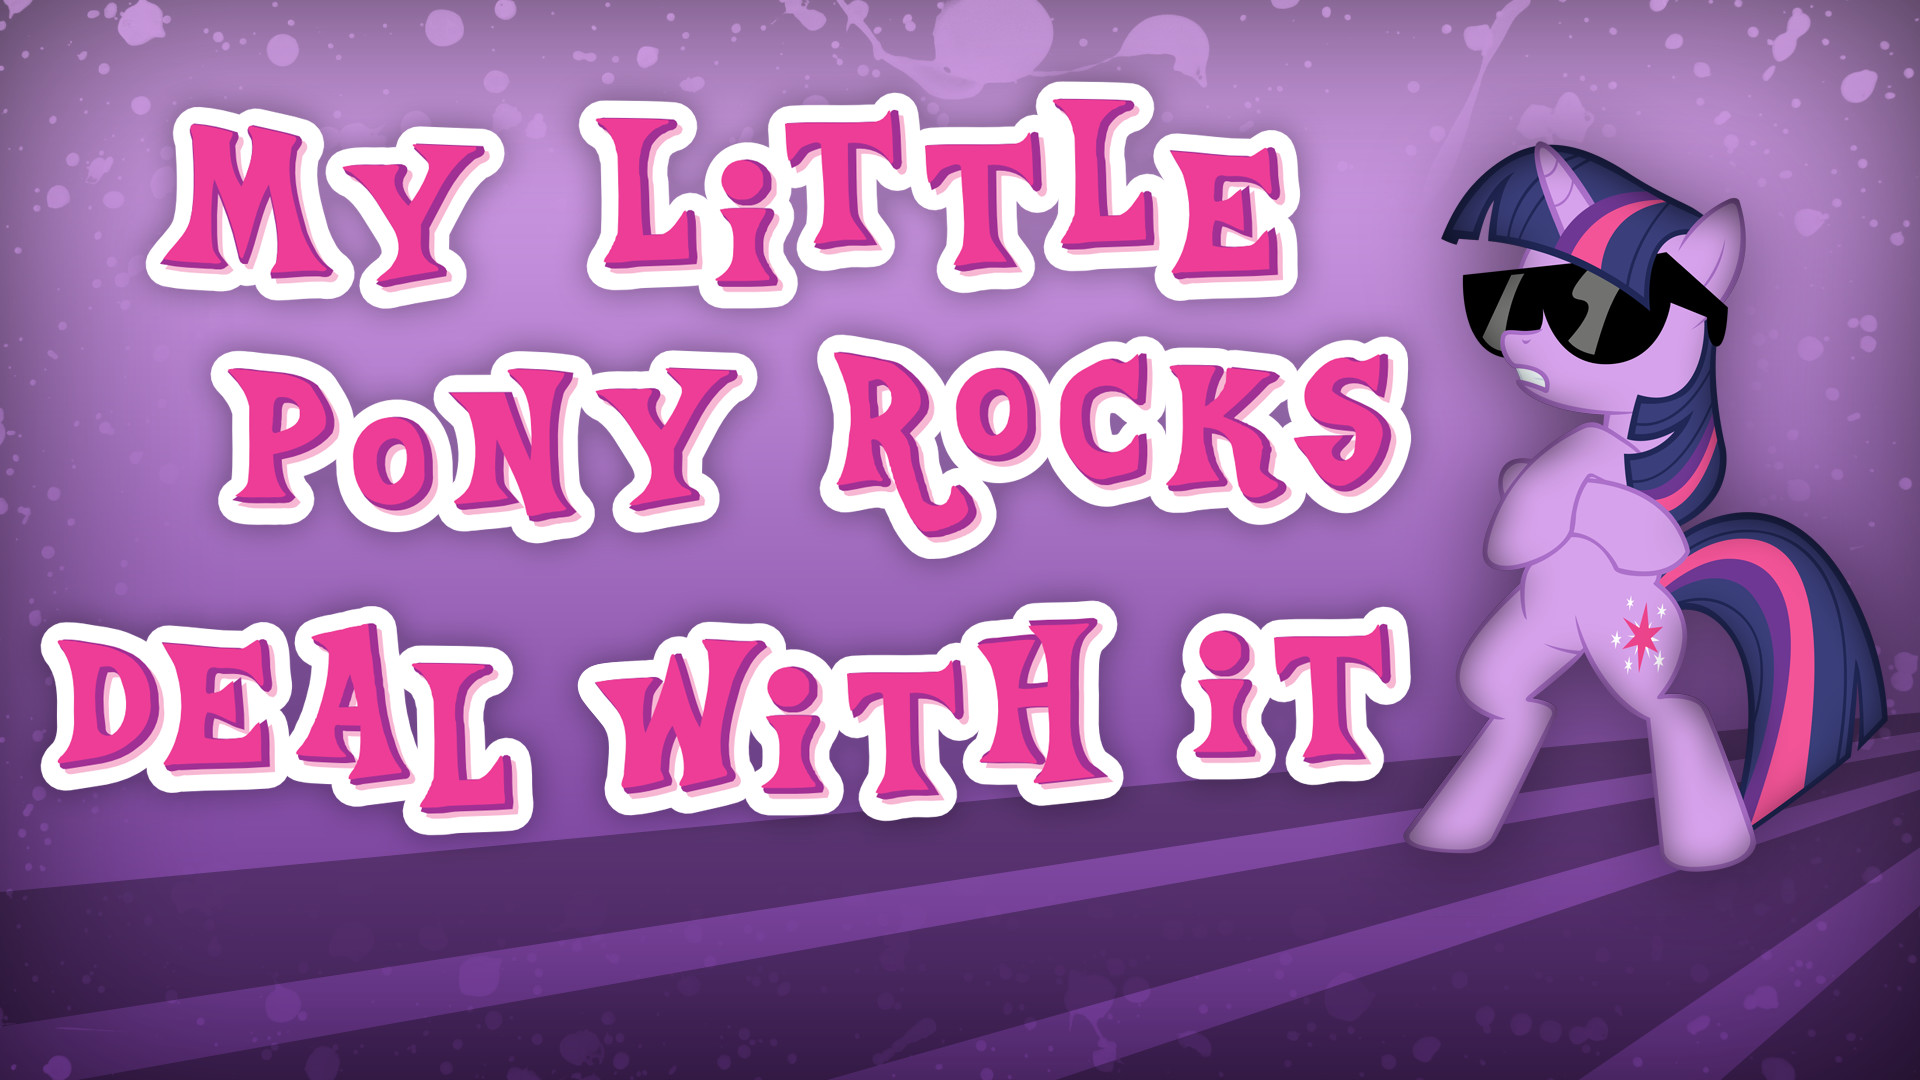 My Little Pony Rocks Wallpaper by Dipi11